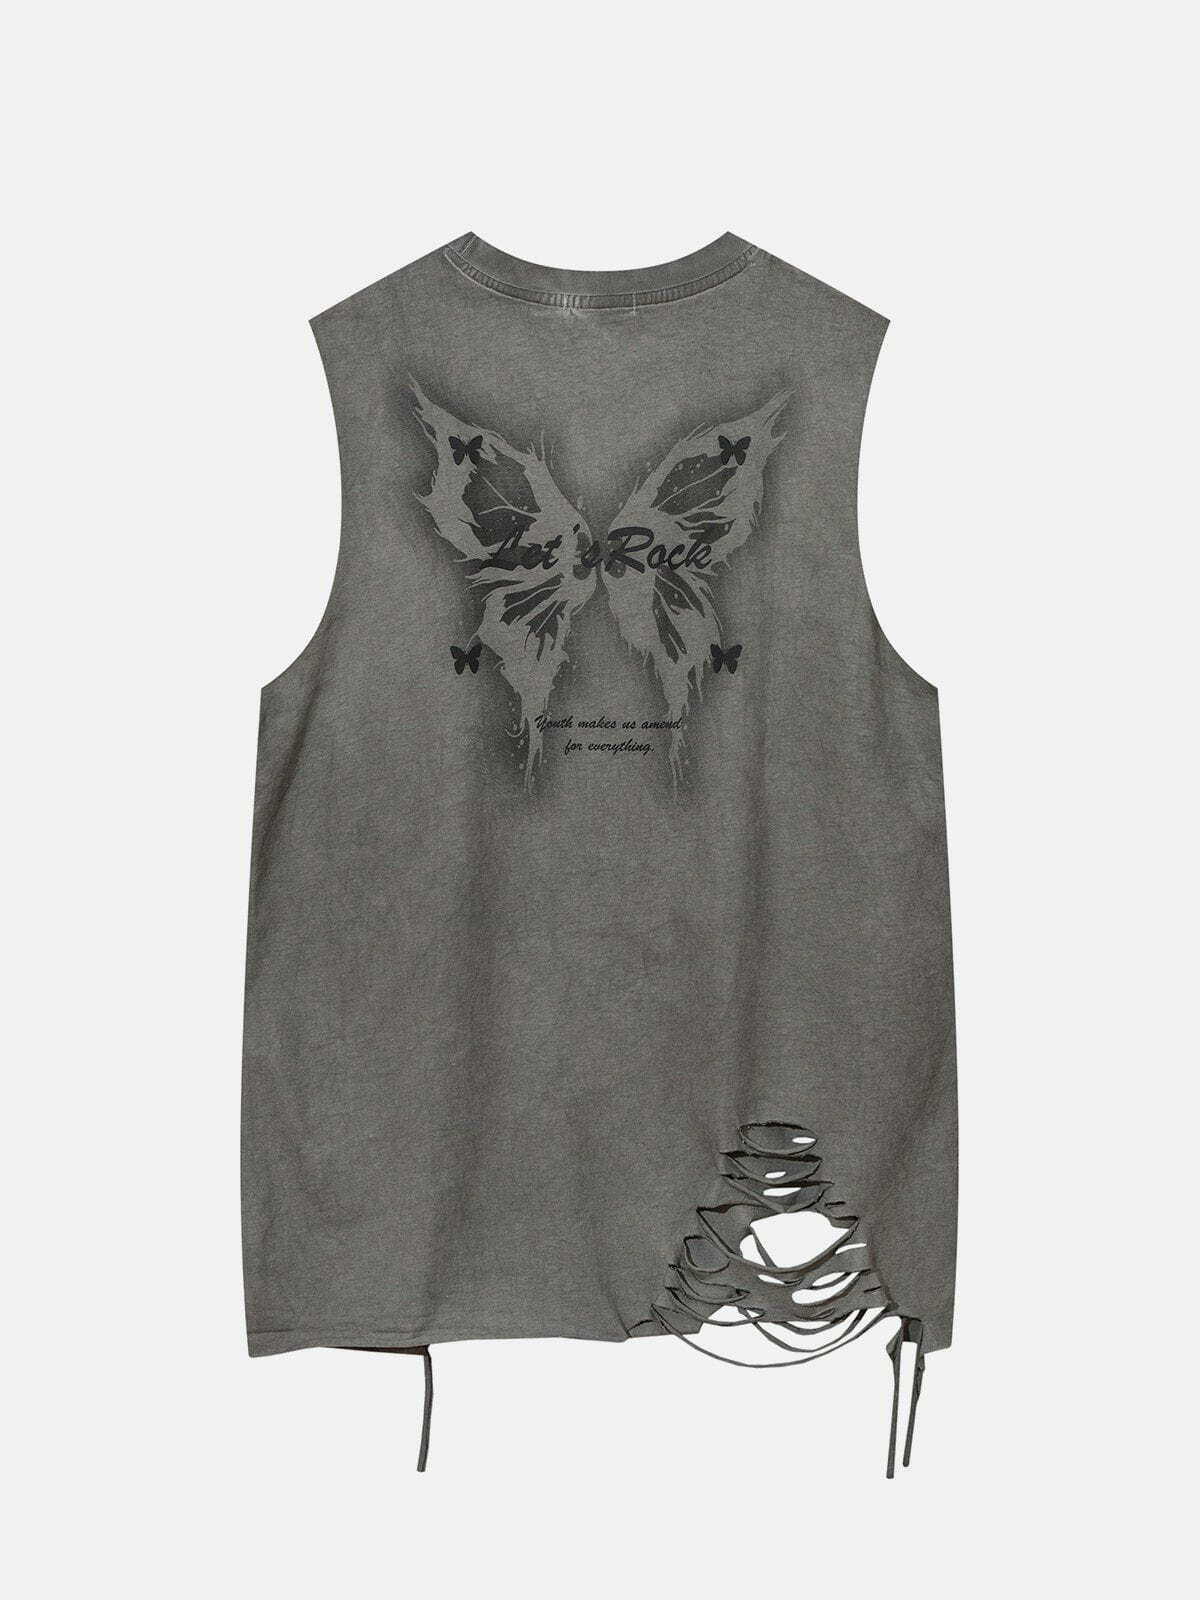 butterfly print necklace vest   edgy & retro streetwear 1540